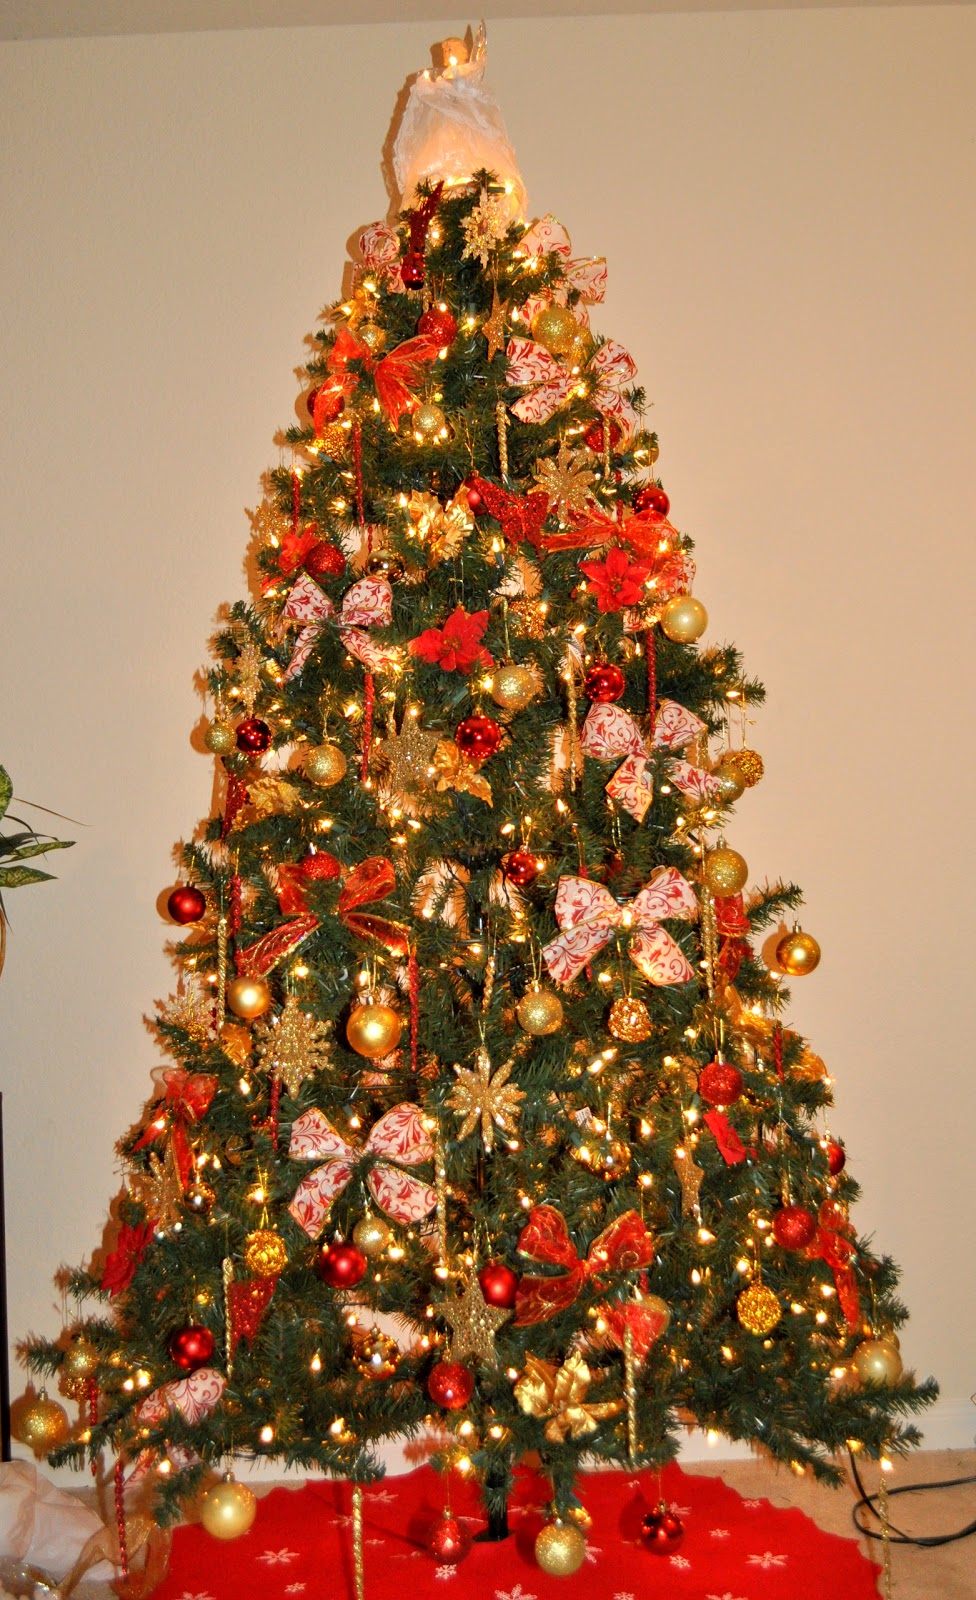 Life's Perception & Inspiration: Christmas Tree 2011